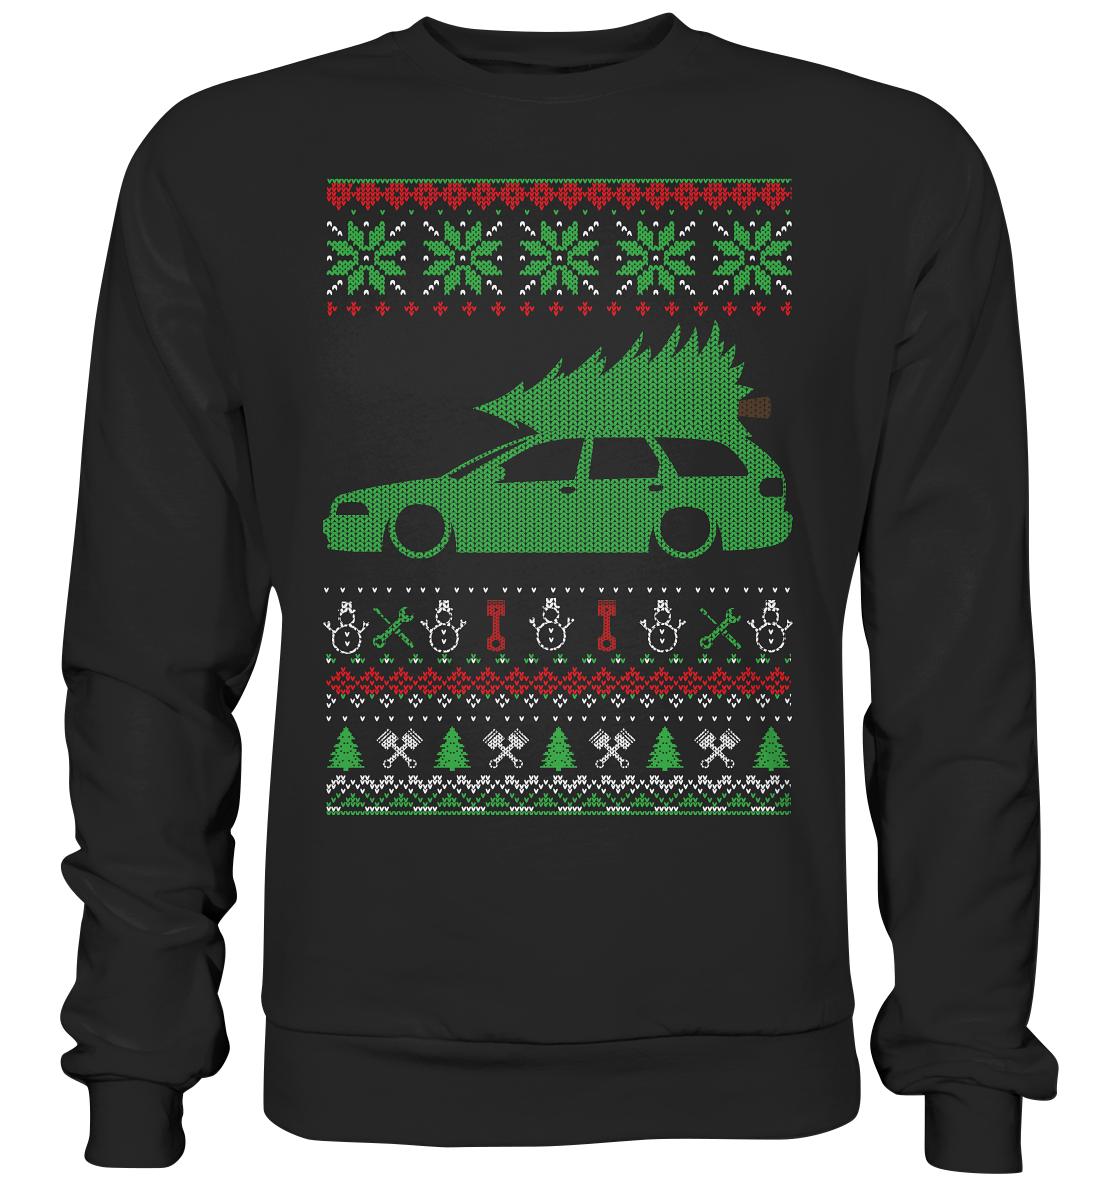 CODUGLY_VGKV40 - Premium Sweatshirt